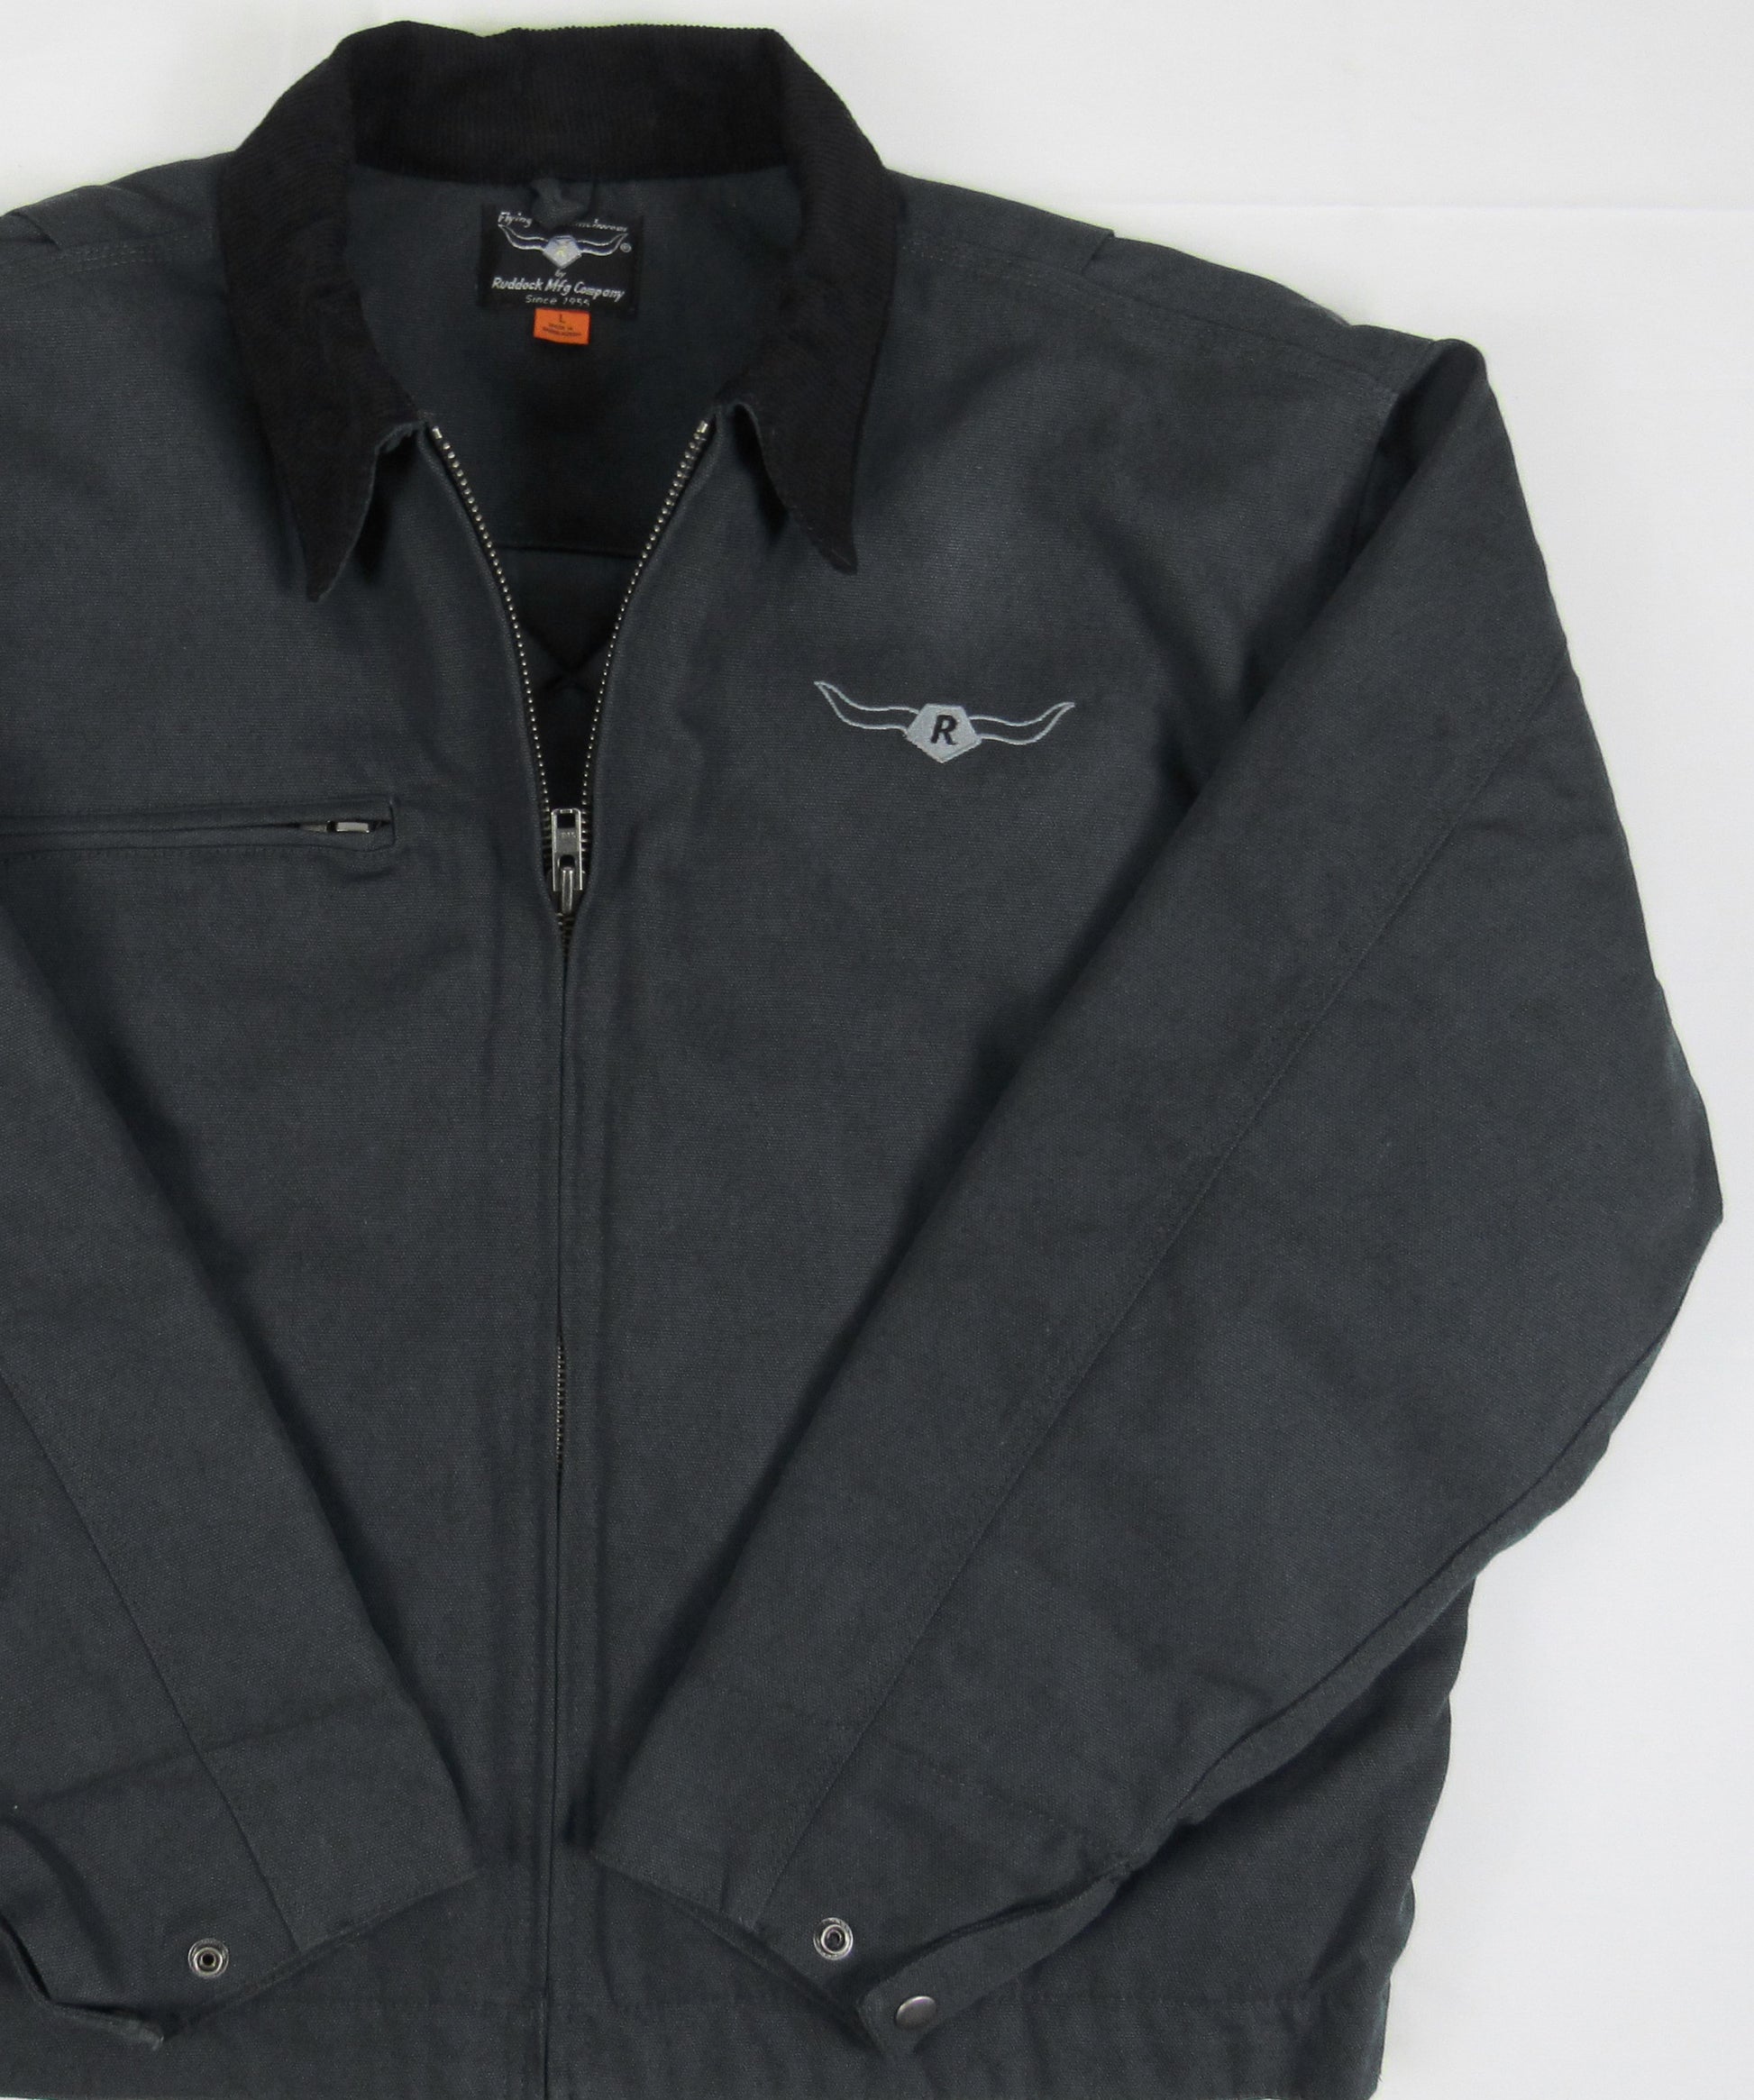 prairie canvas jacket by Flying R Ranchwear in graphite gray